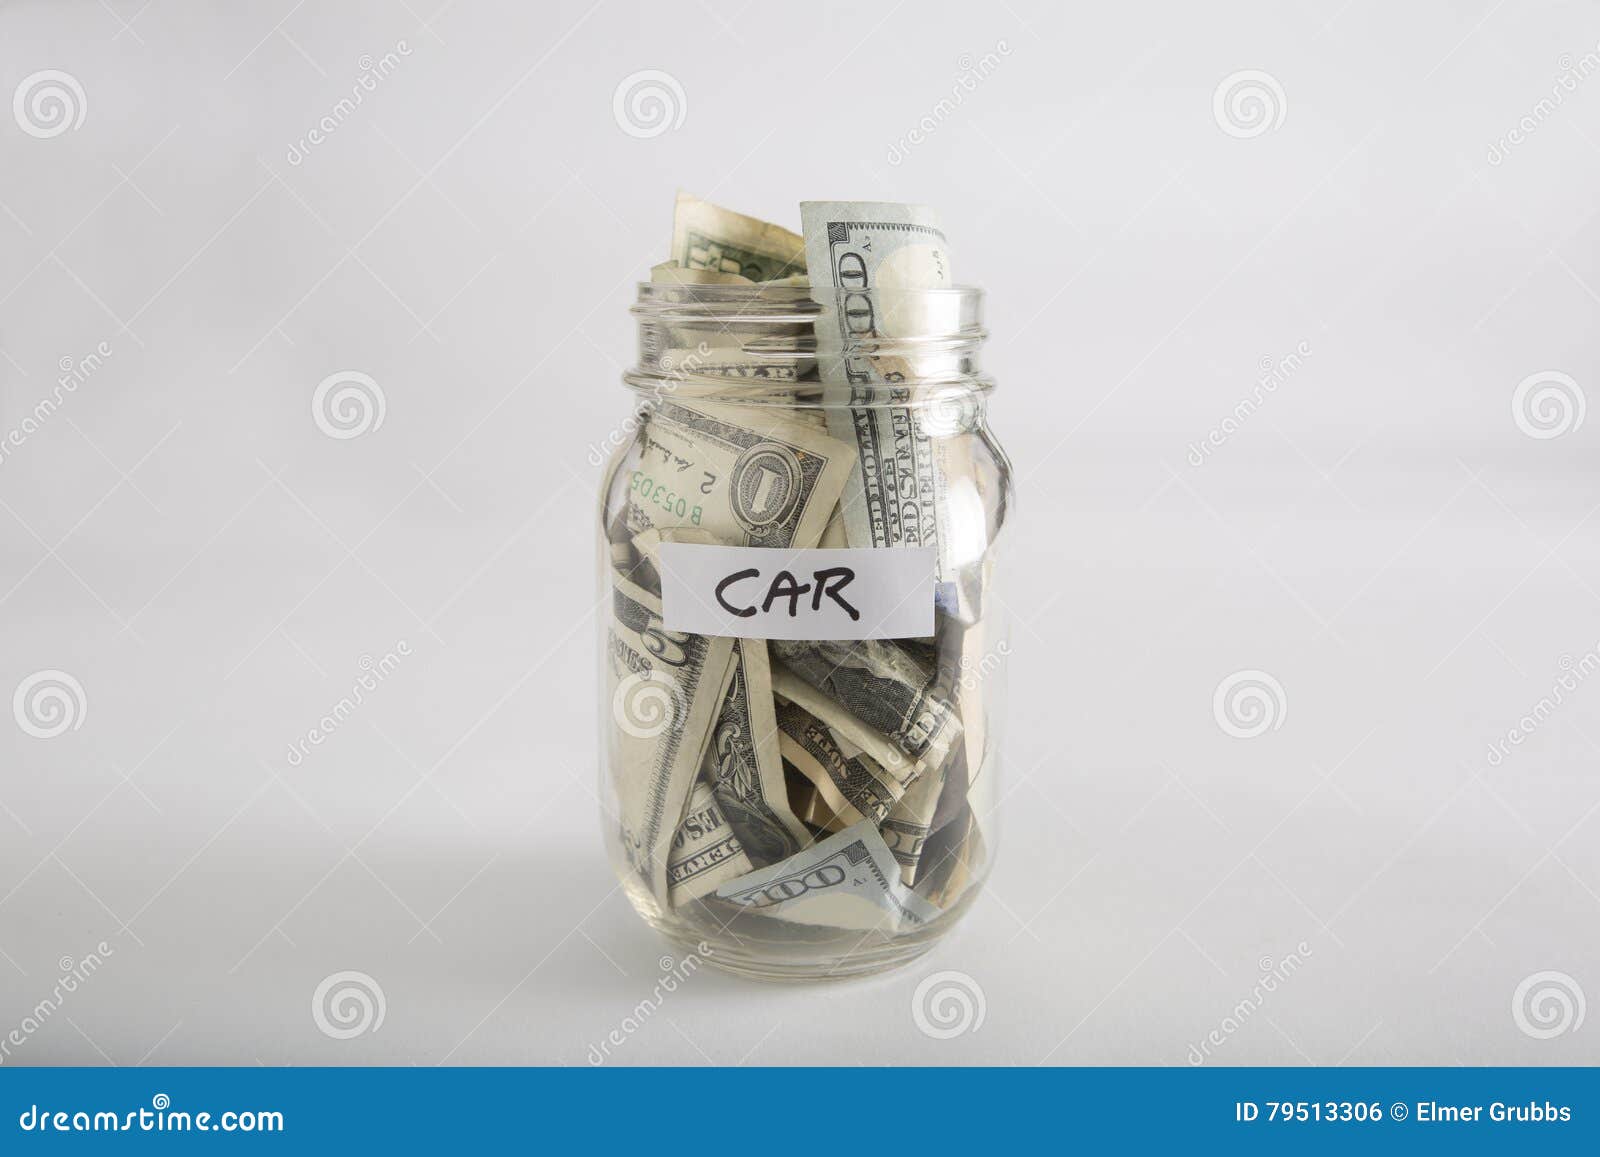 Closeup of Mason jar with money for Car